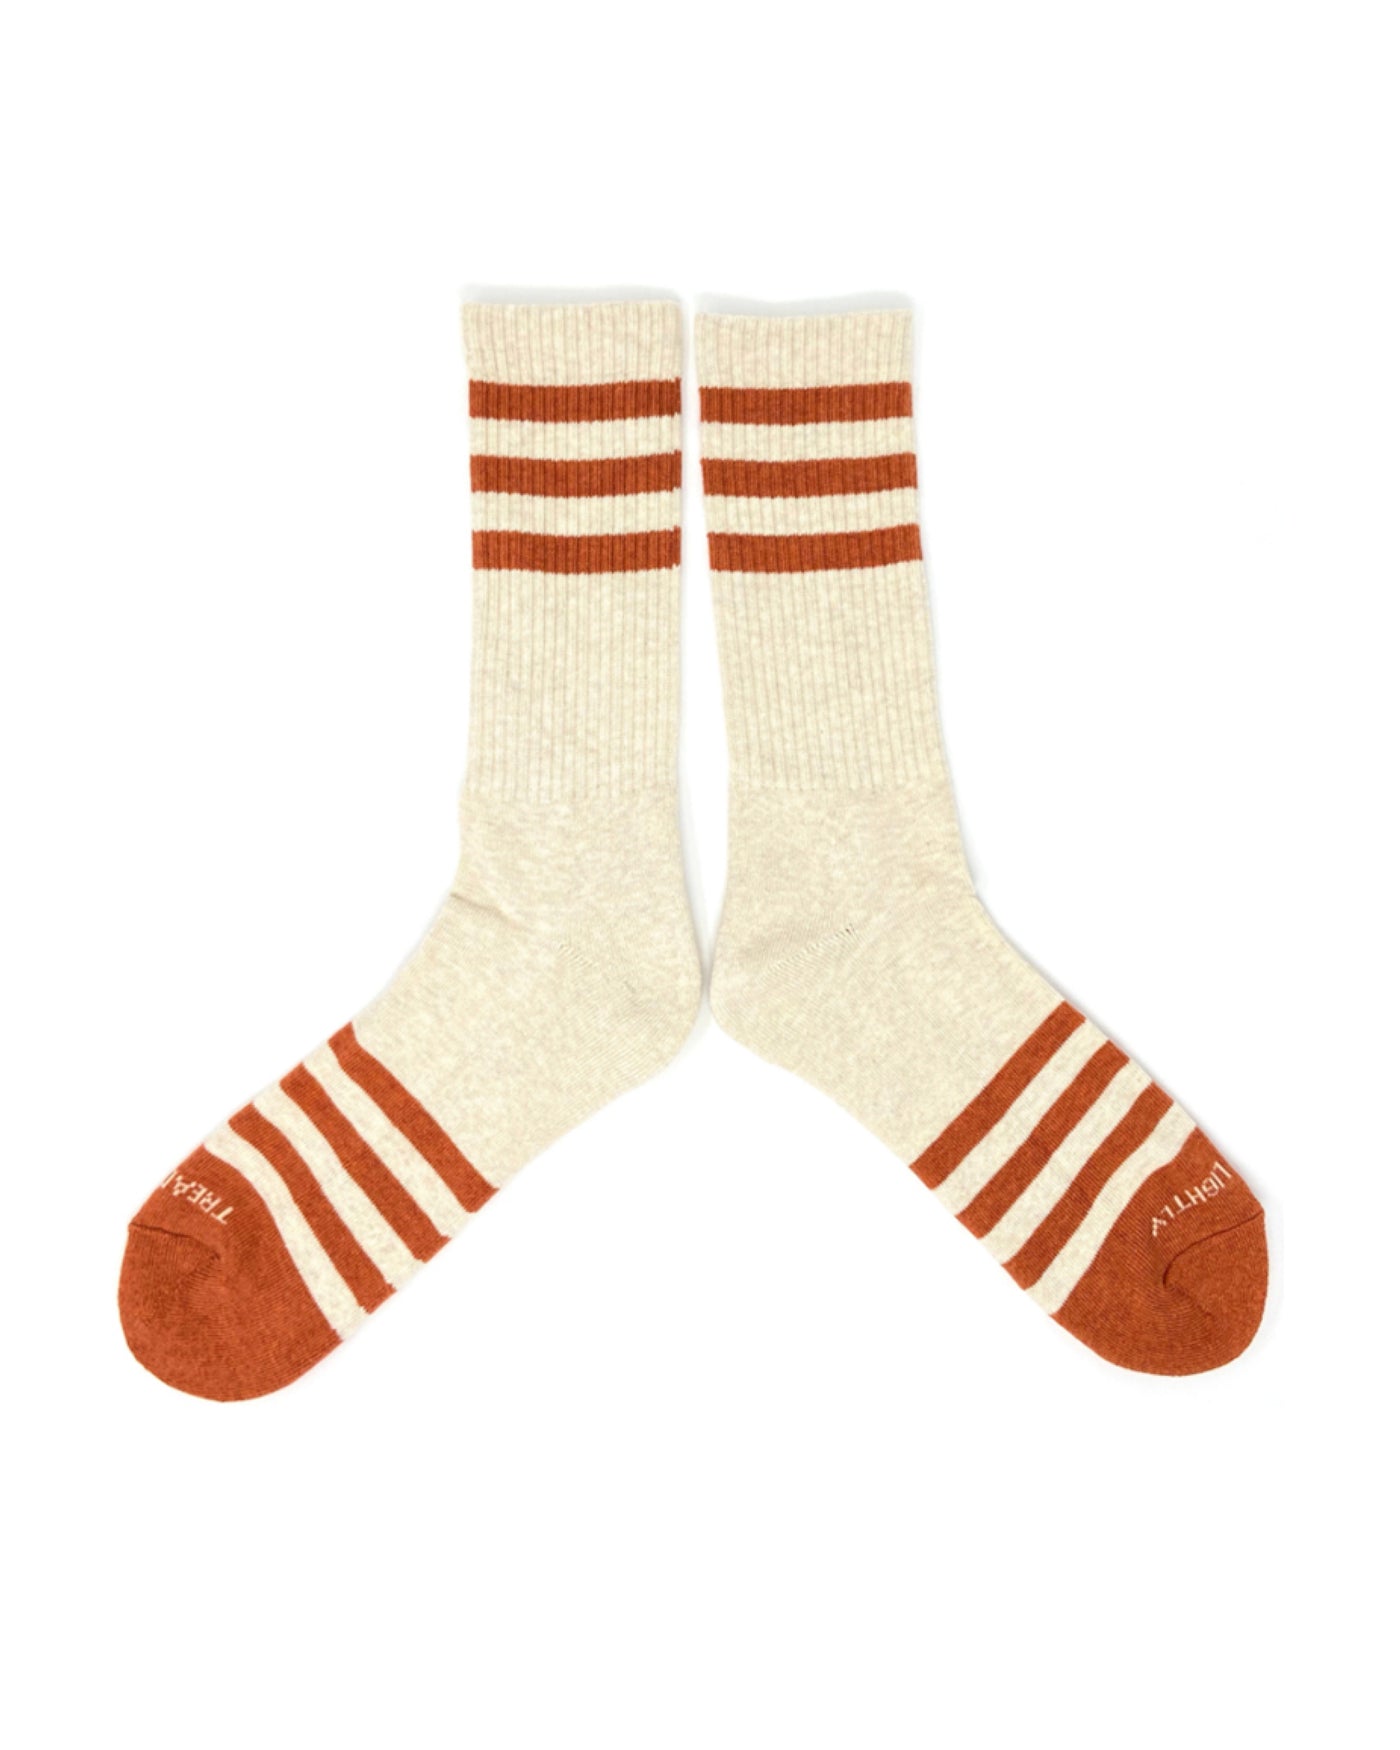 T.A.C Socks Heather Stripes - Cream/Orange